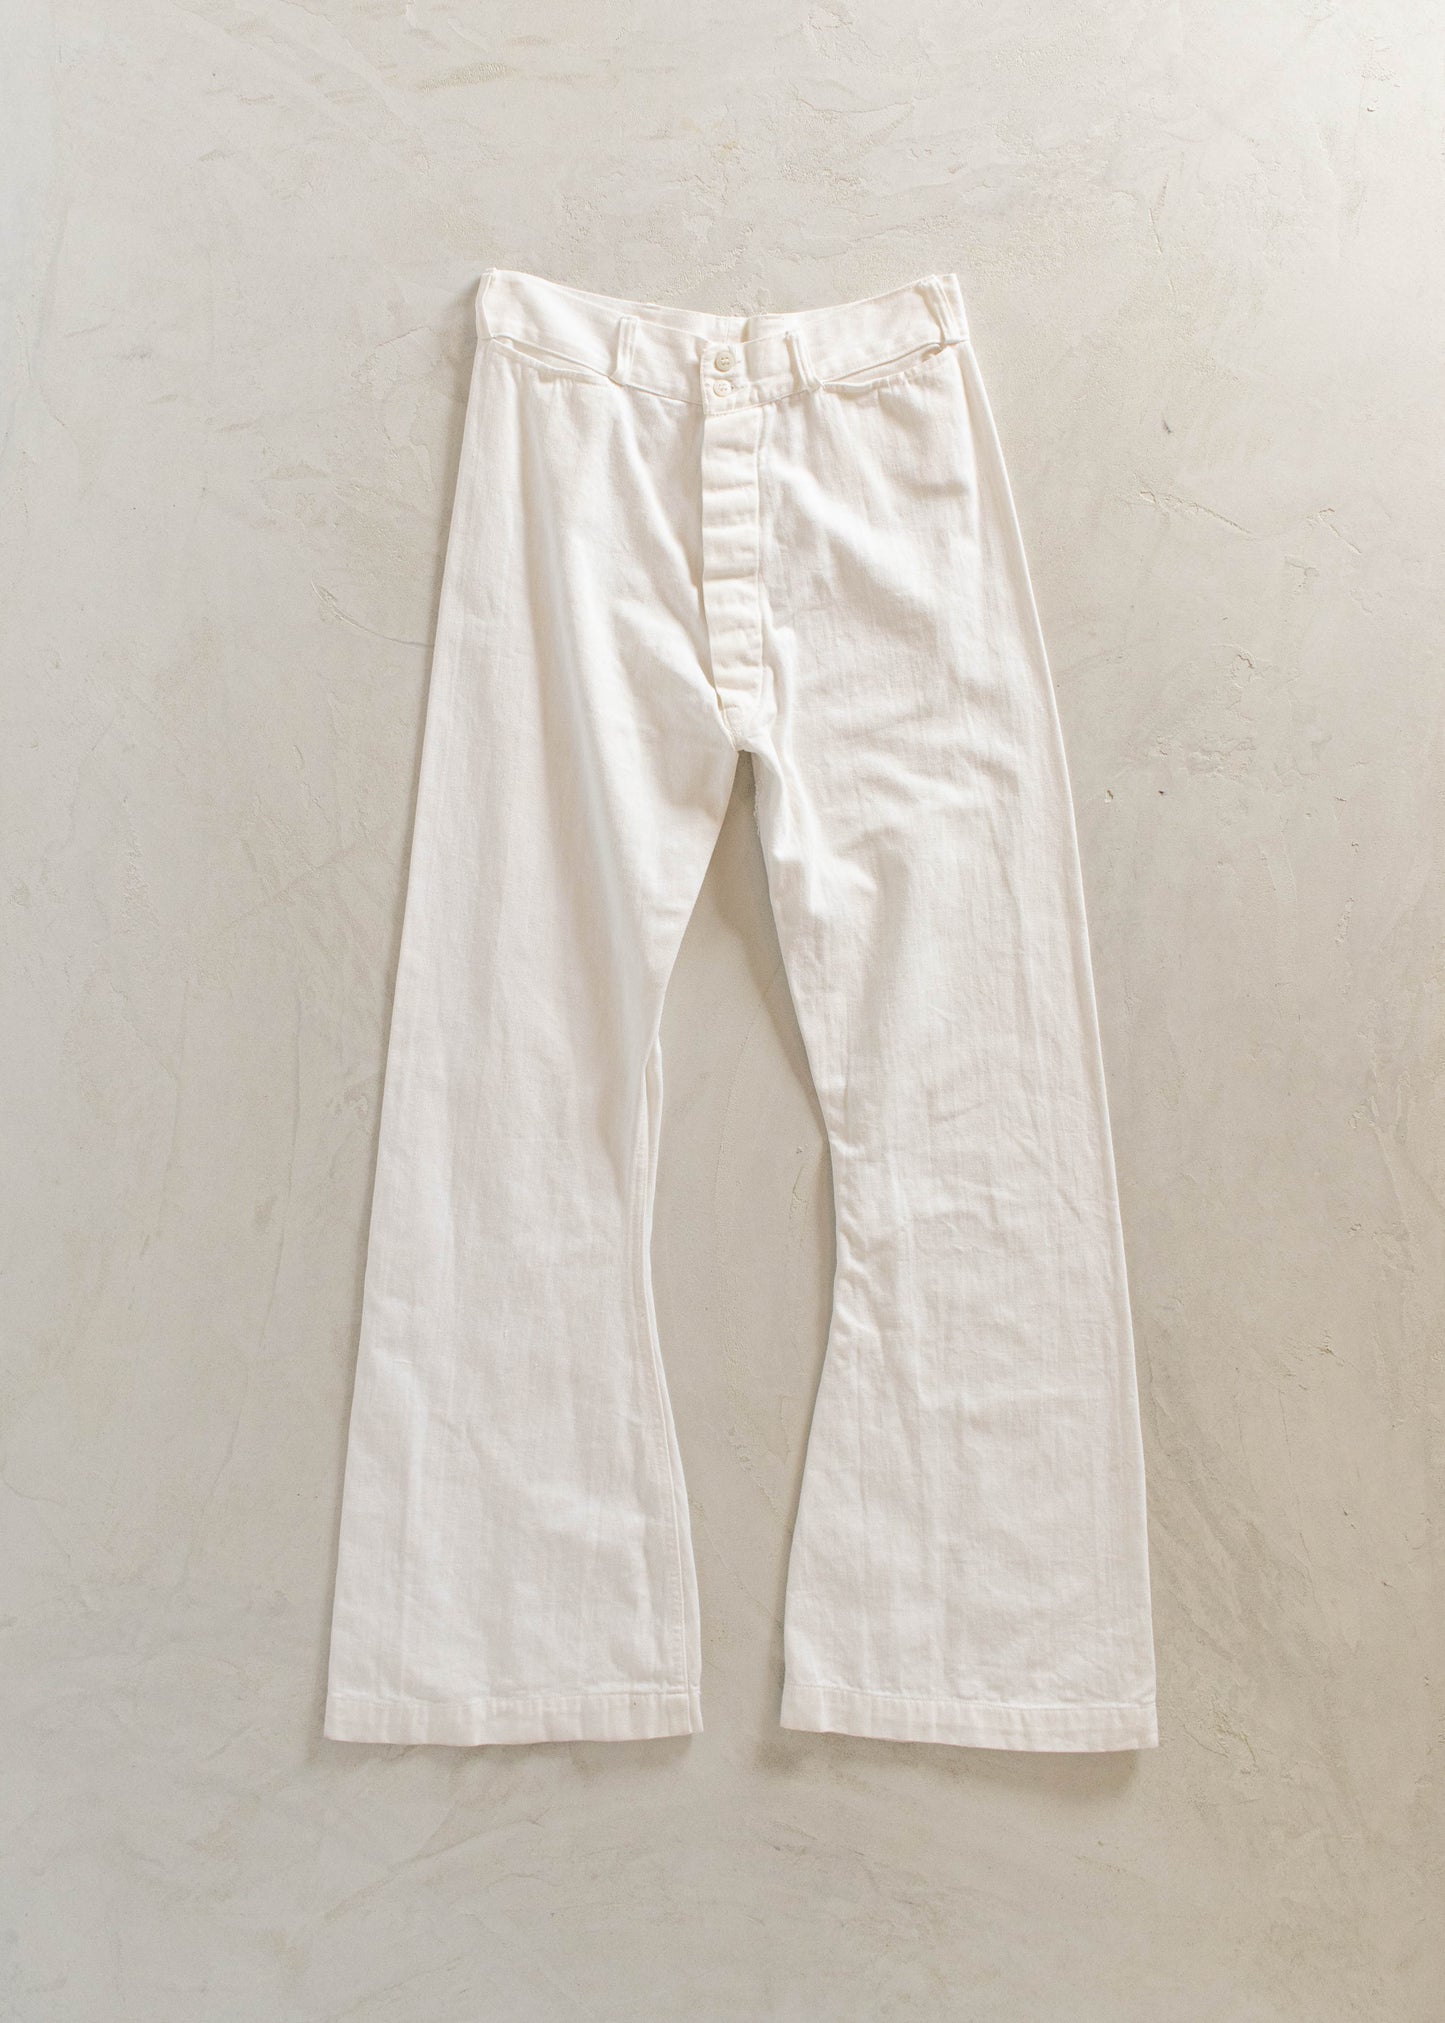 1980s US Navy Sailor Pants Size Women's 29 Men's 32